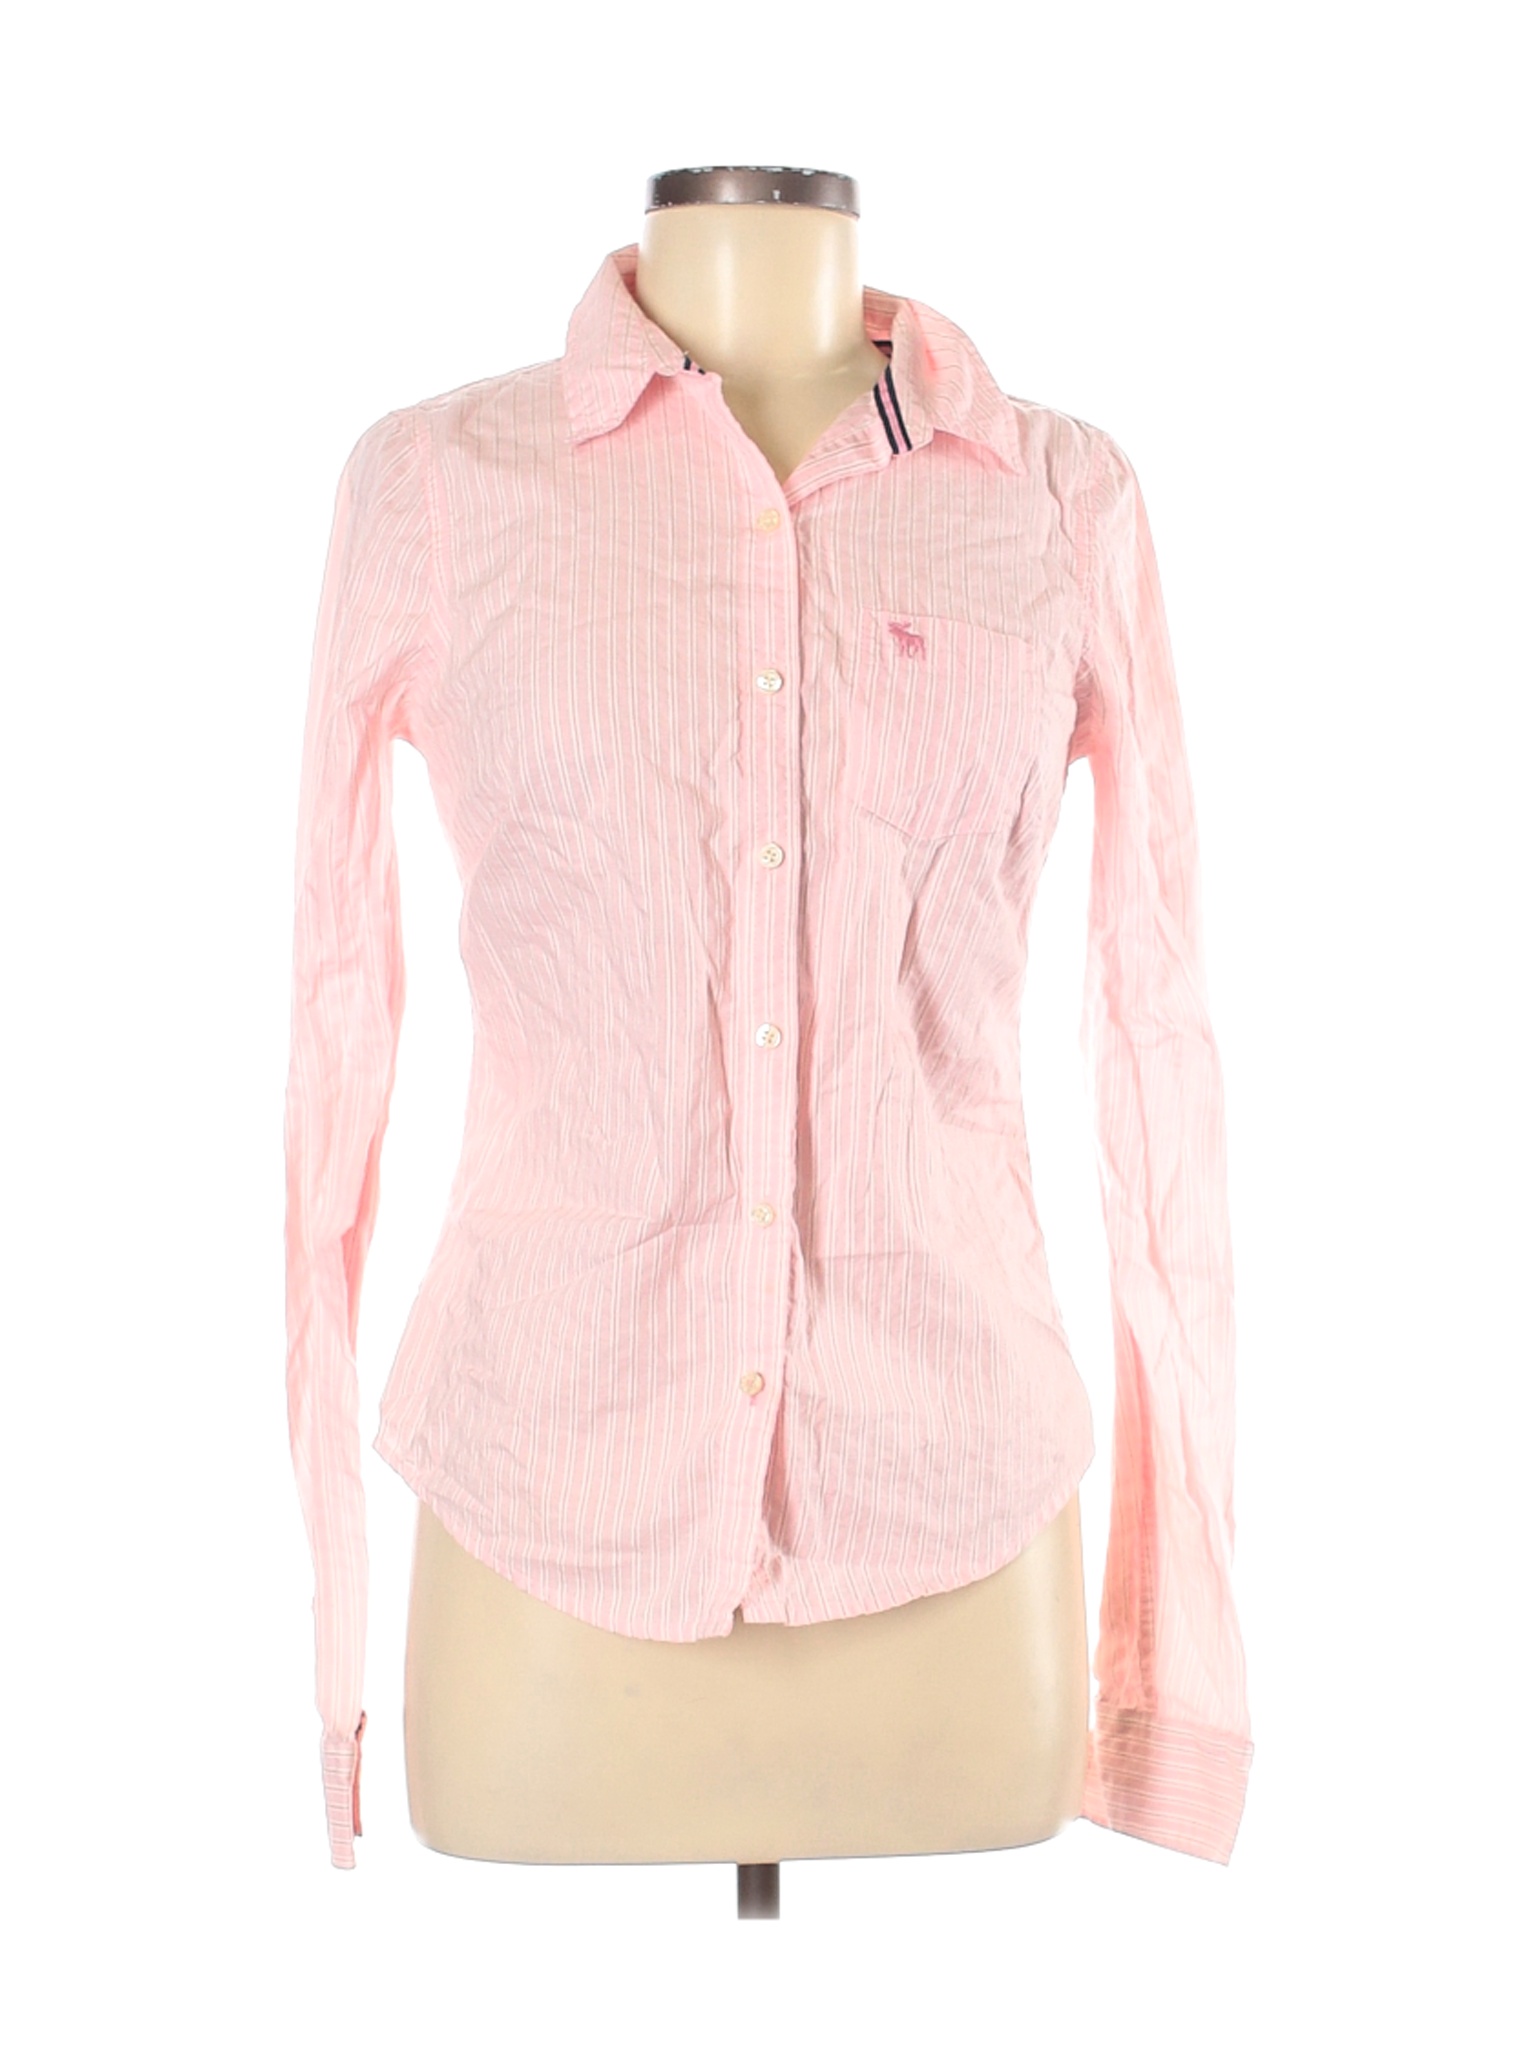 Abercrombie & Fitch Women Pink Long Sleeve Button-Down Shirt M | eBay